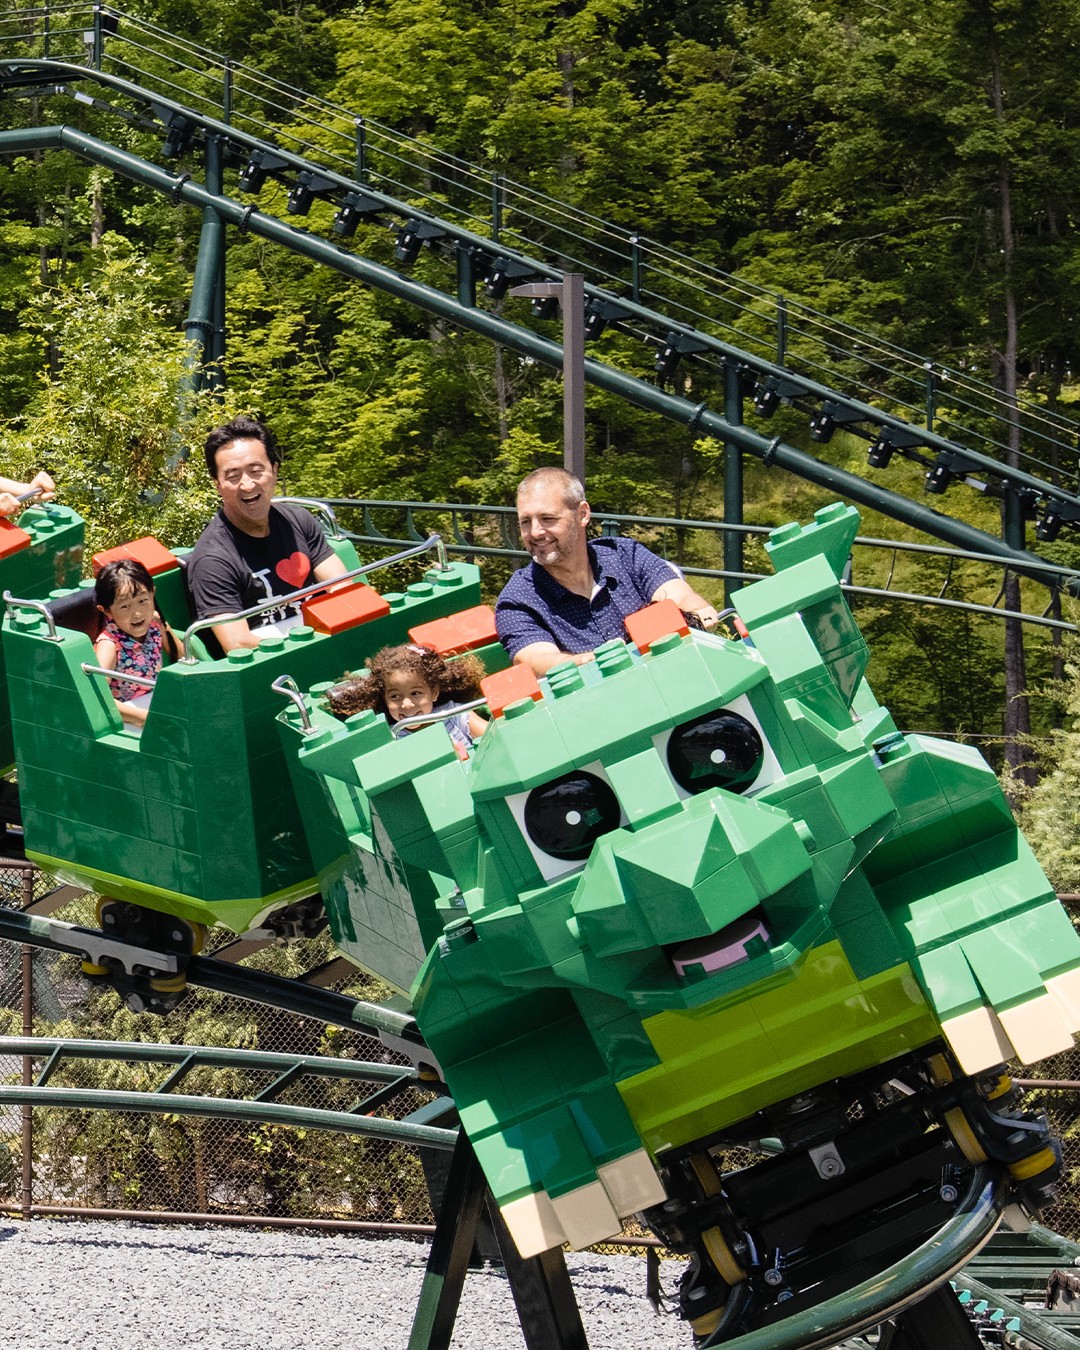 Four One Day Admissions to Legoland Amusement Park